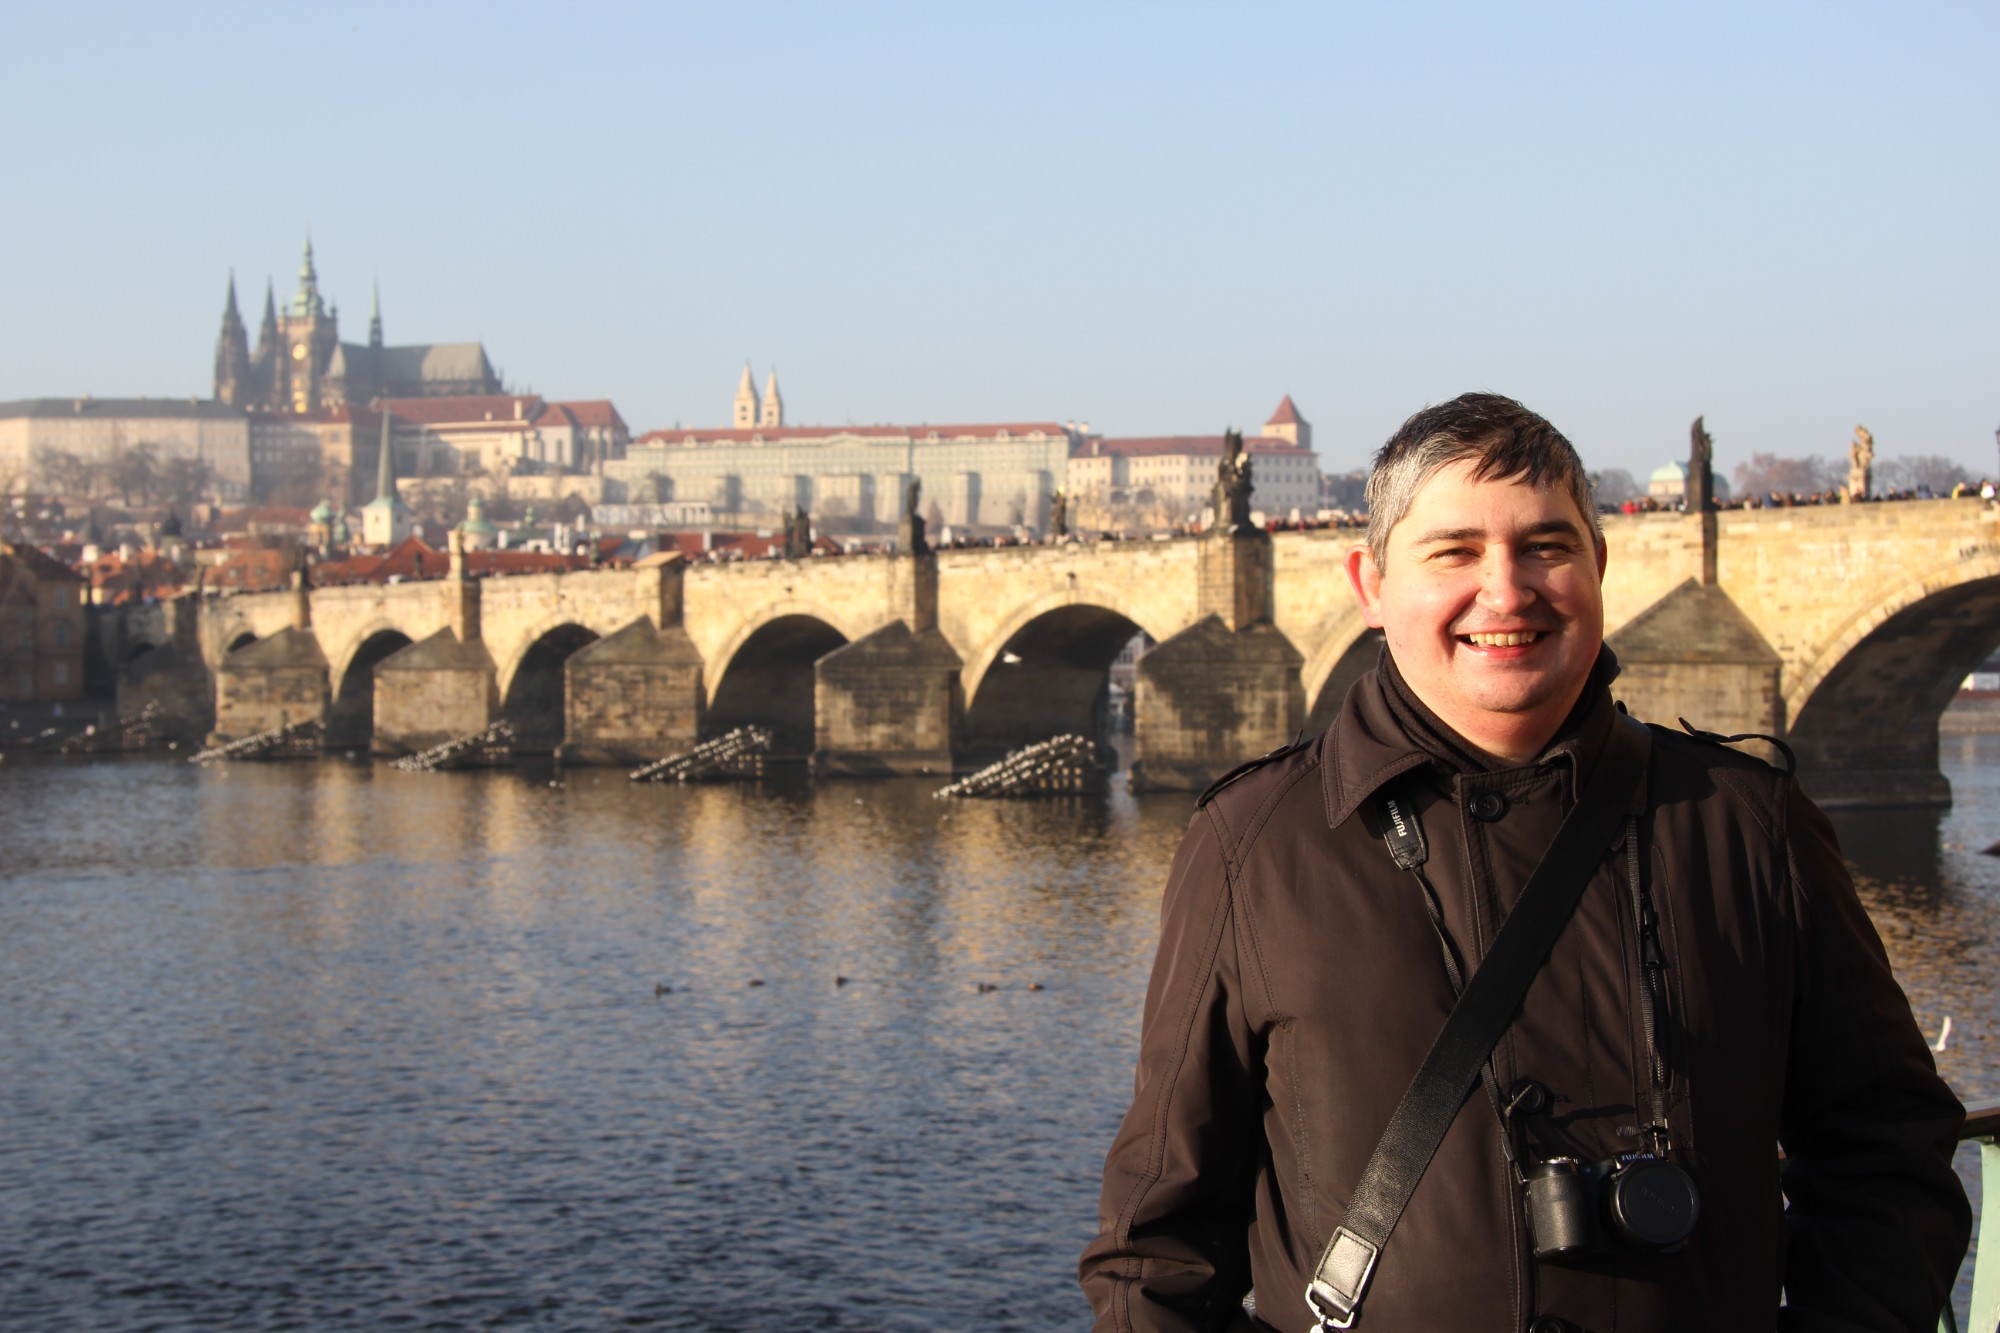 Прага. Я на фоне Карлова моста. (31.12.2016)